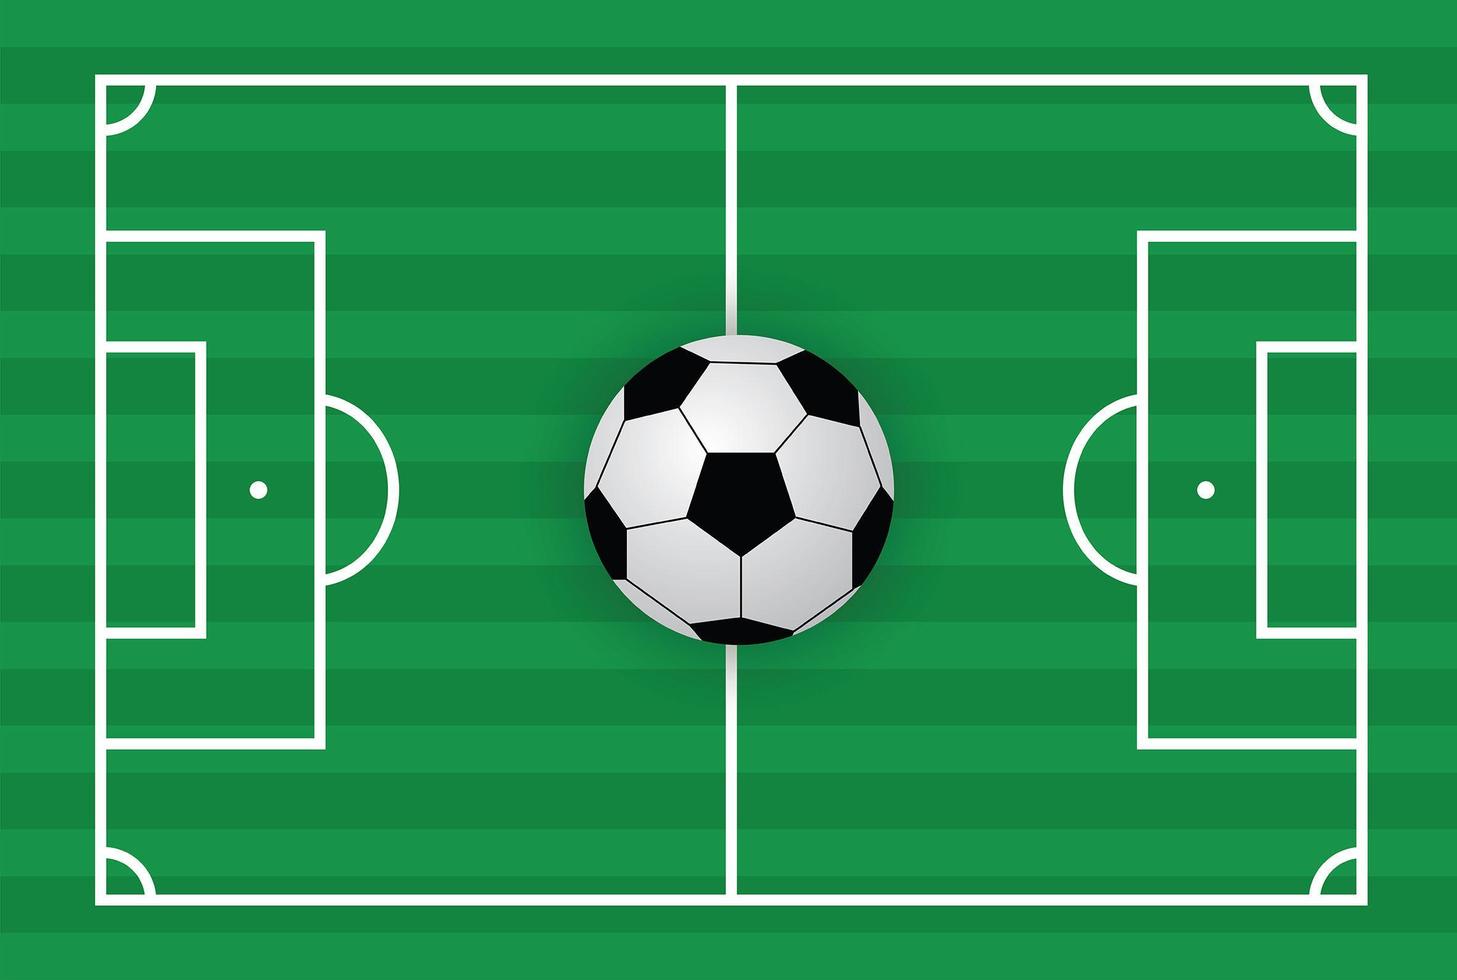 Football or soccer ball in green field vector